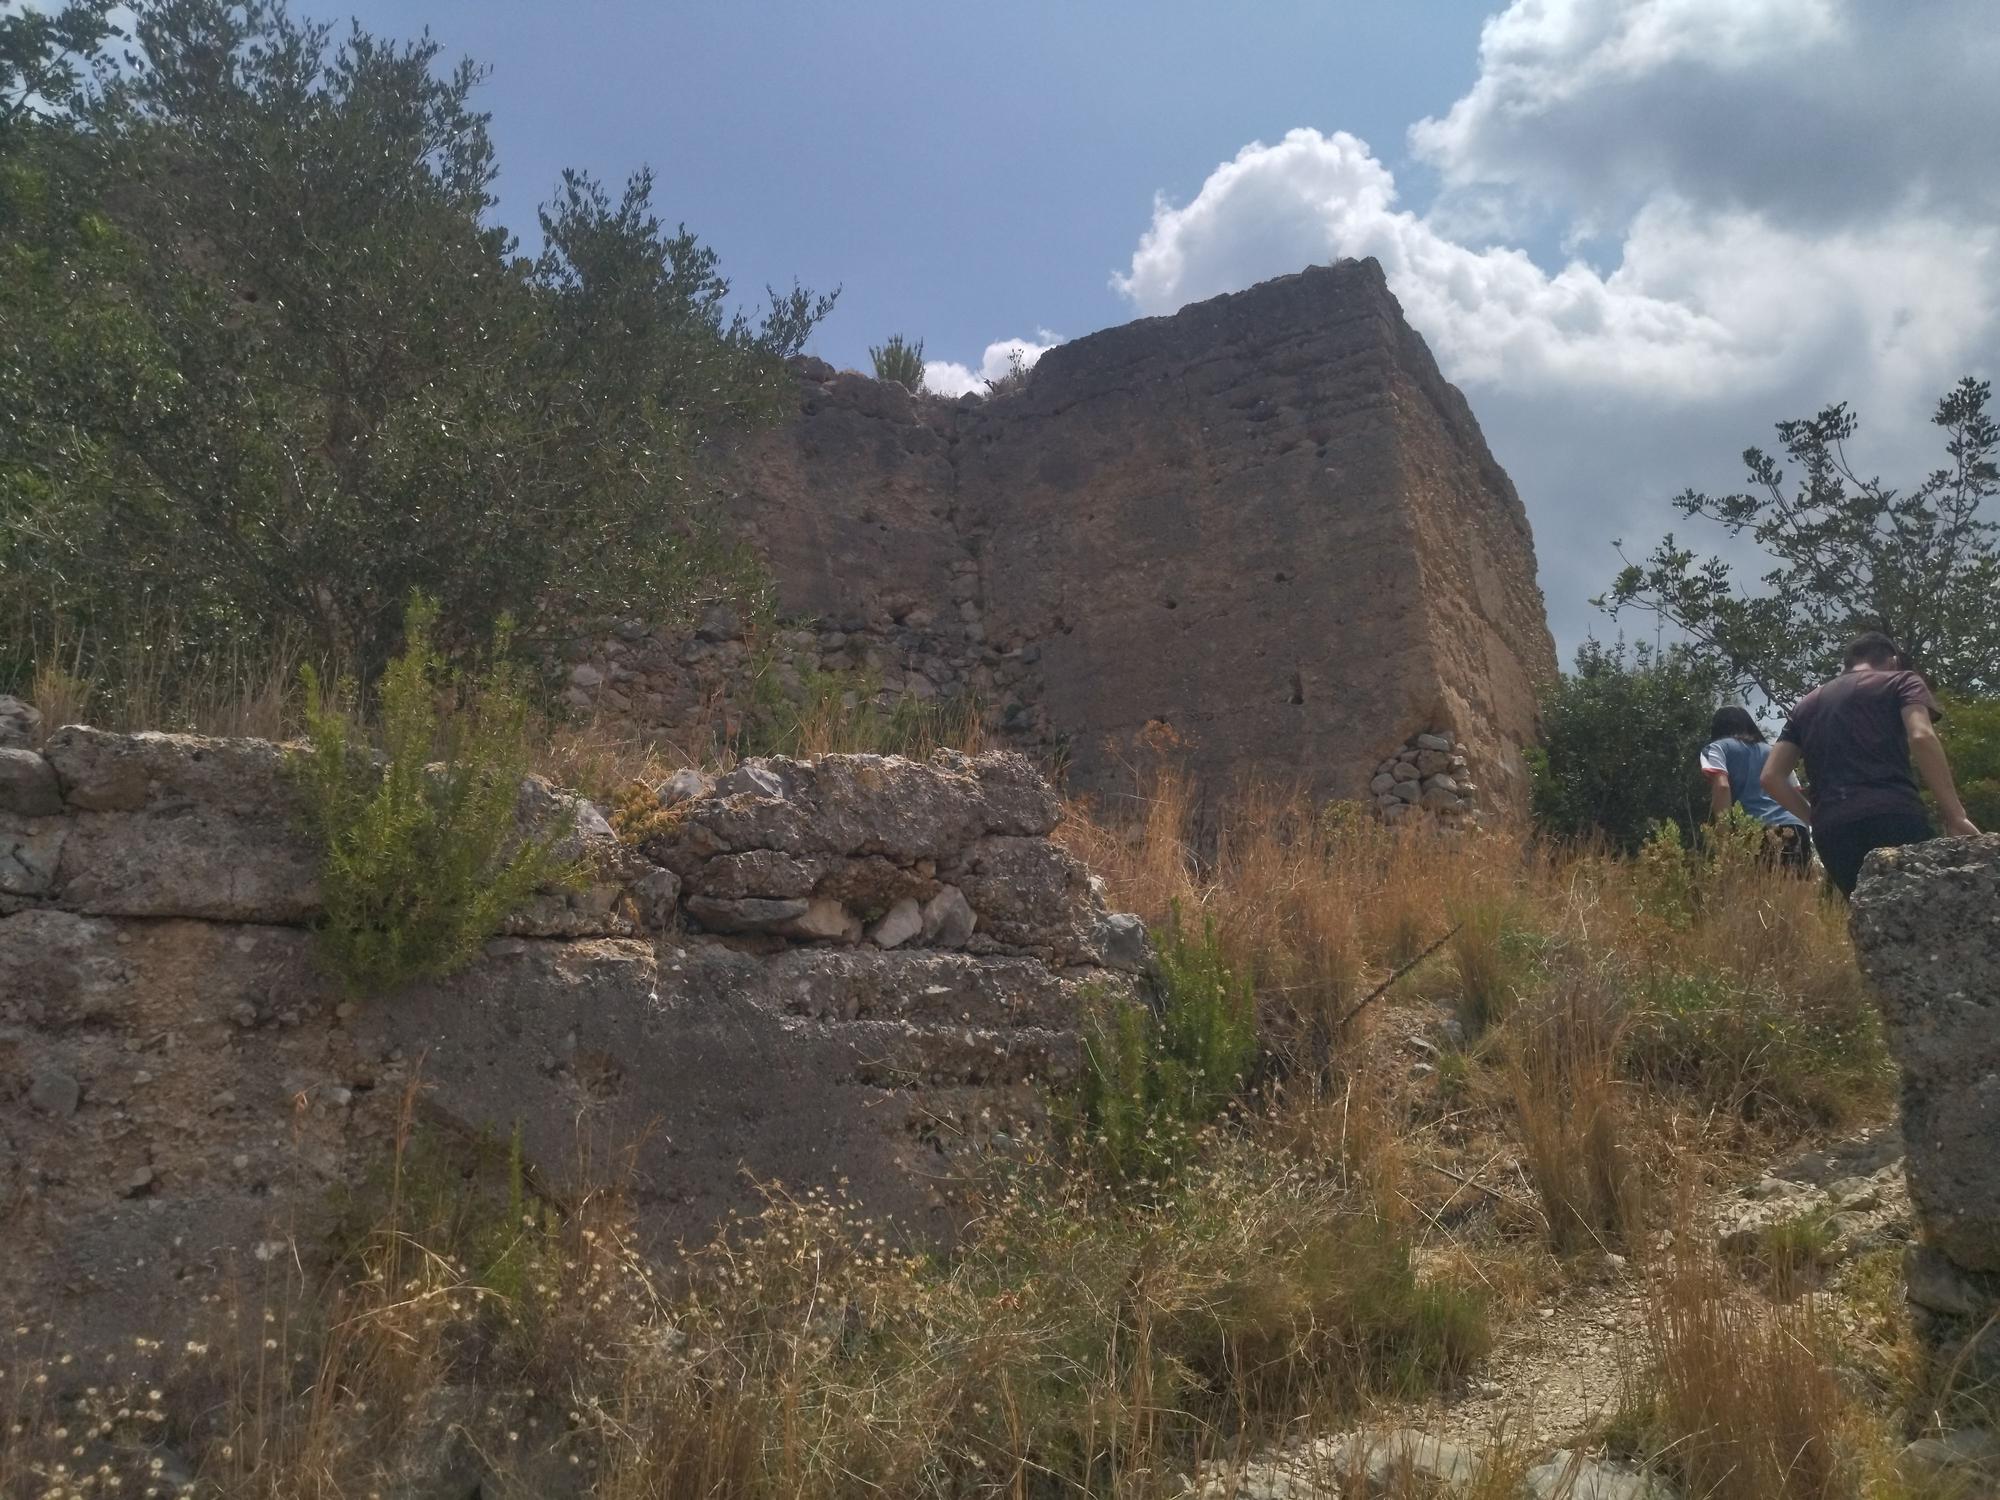 El Castell d’Ambra del siglo XIII, la gran atalaya de Pego